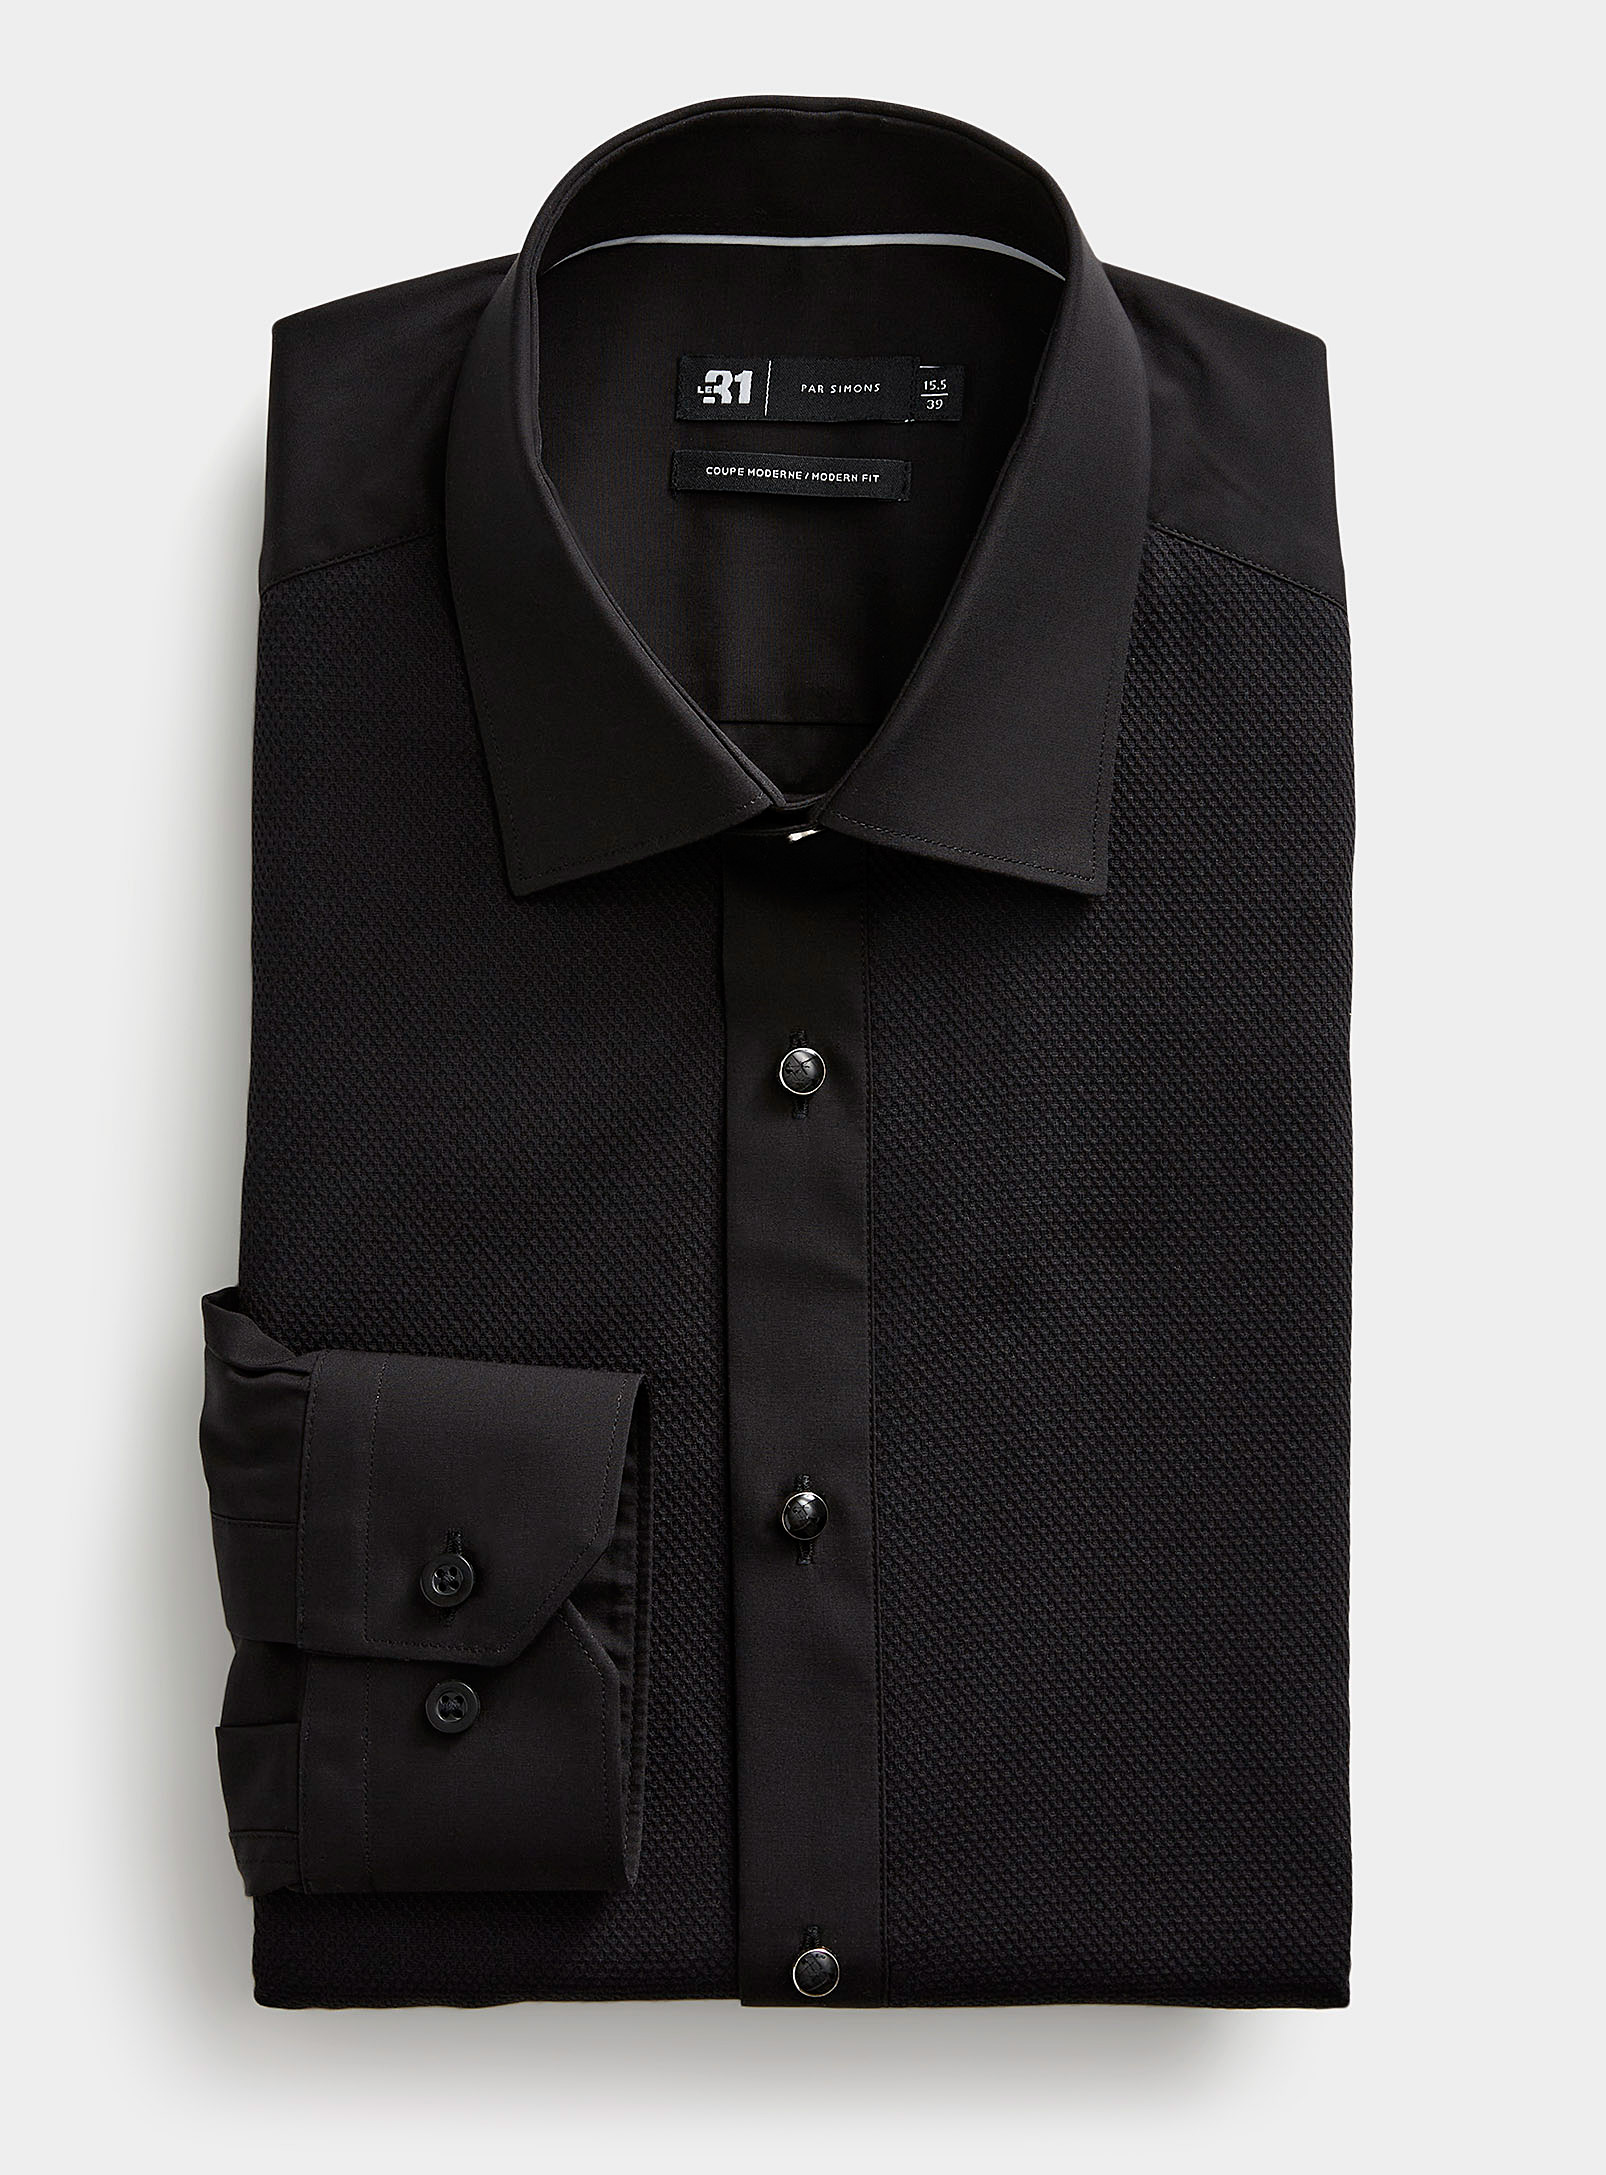 Le 31 Diamond Jacquard Tuxedo Shirt Modern Fit In Black